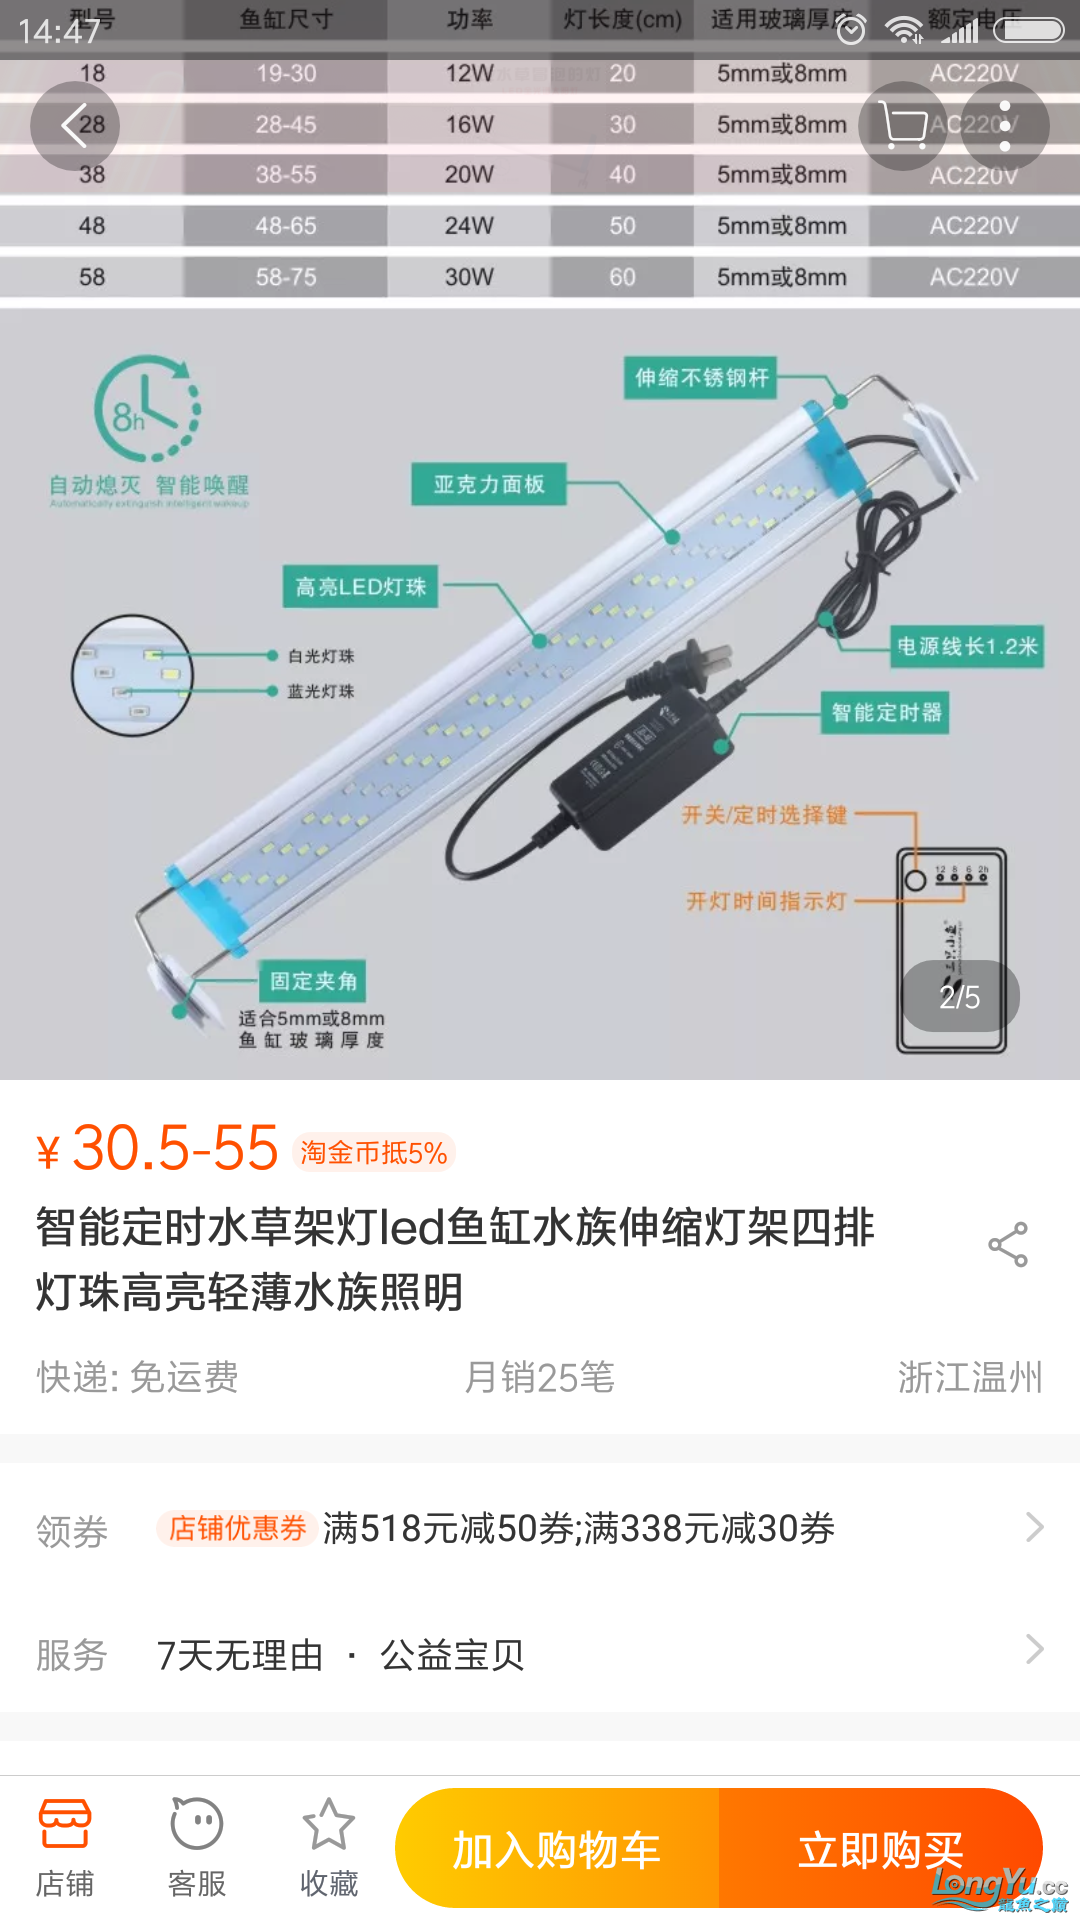 Screenshot_2018-06-19-14-47-53-360_com.taobao.taobao.png